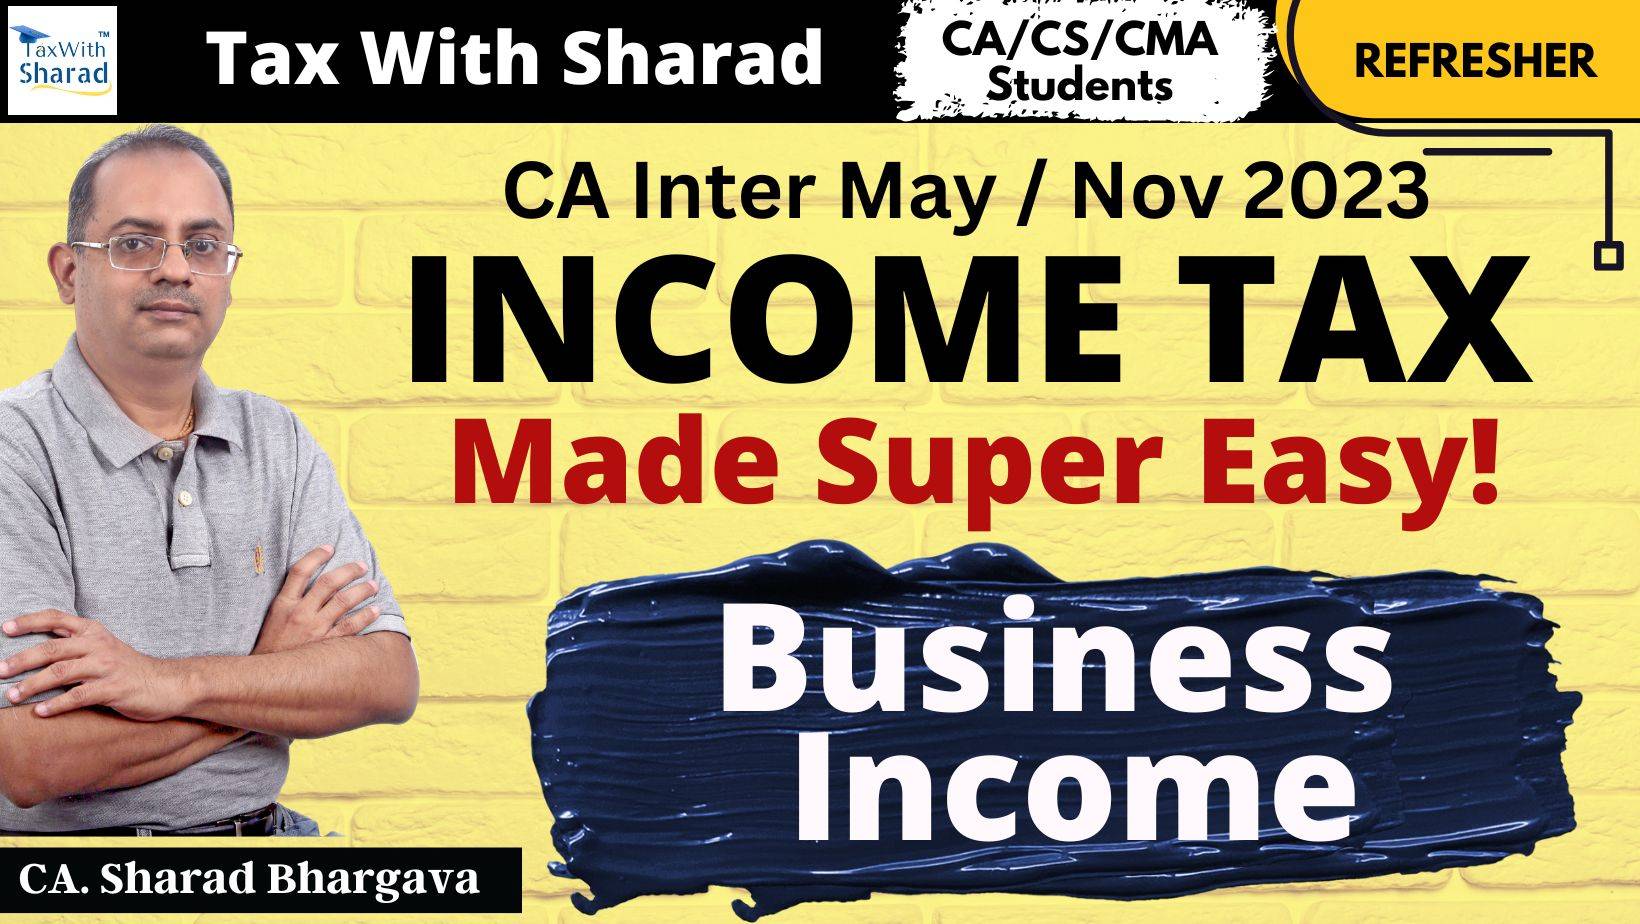 Refresher (DT) / Business Income (PGBP) / CA Inter May/Nov 2023 / CA. Sharad Bhargava